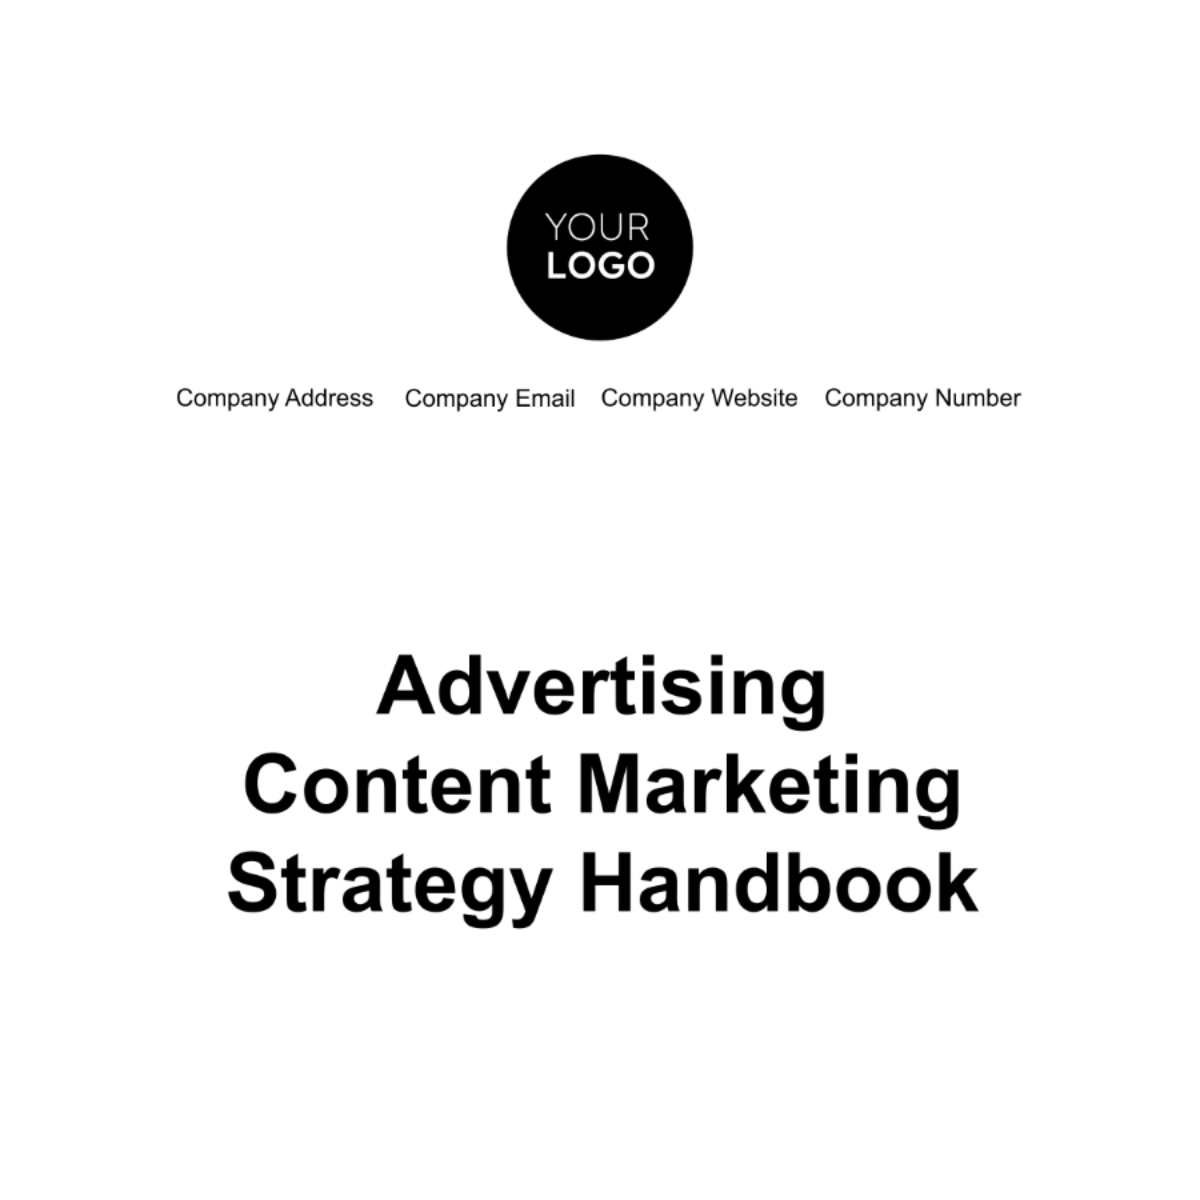 Advertising Content Marketing Strategy Handbook Template